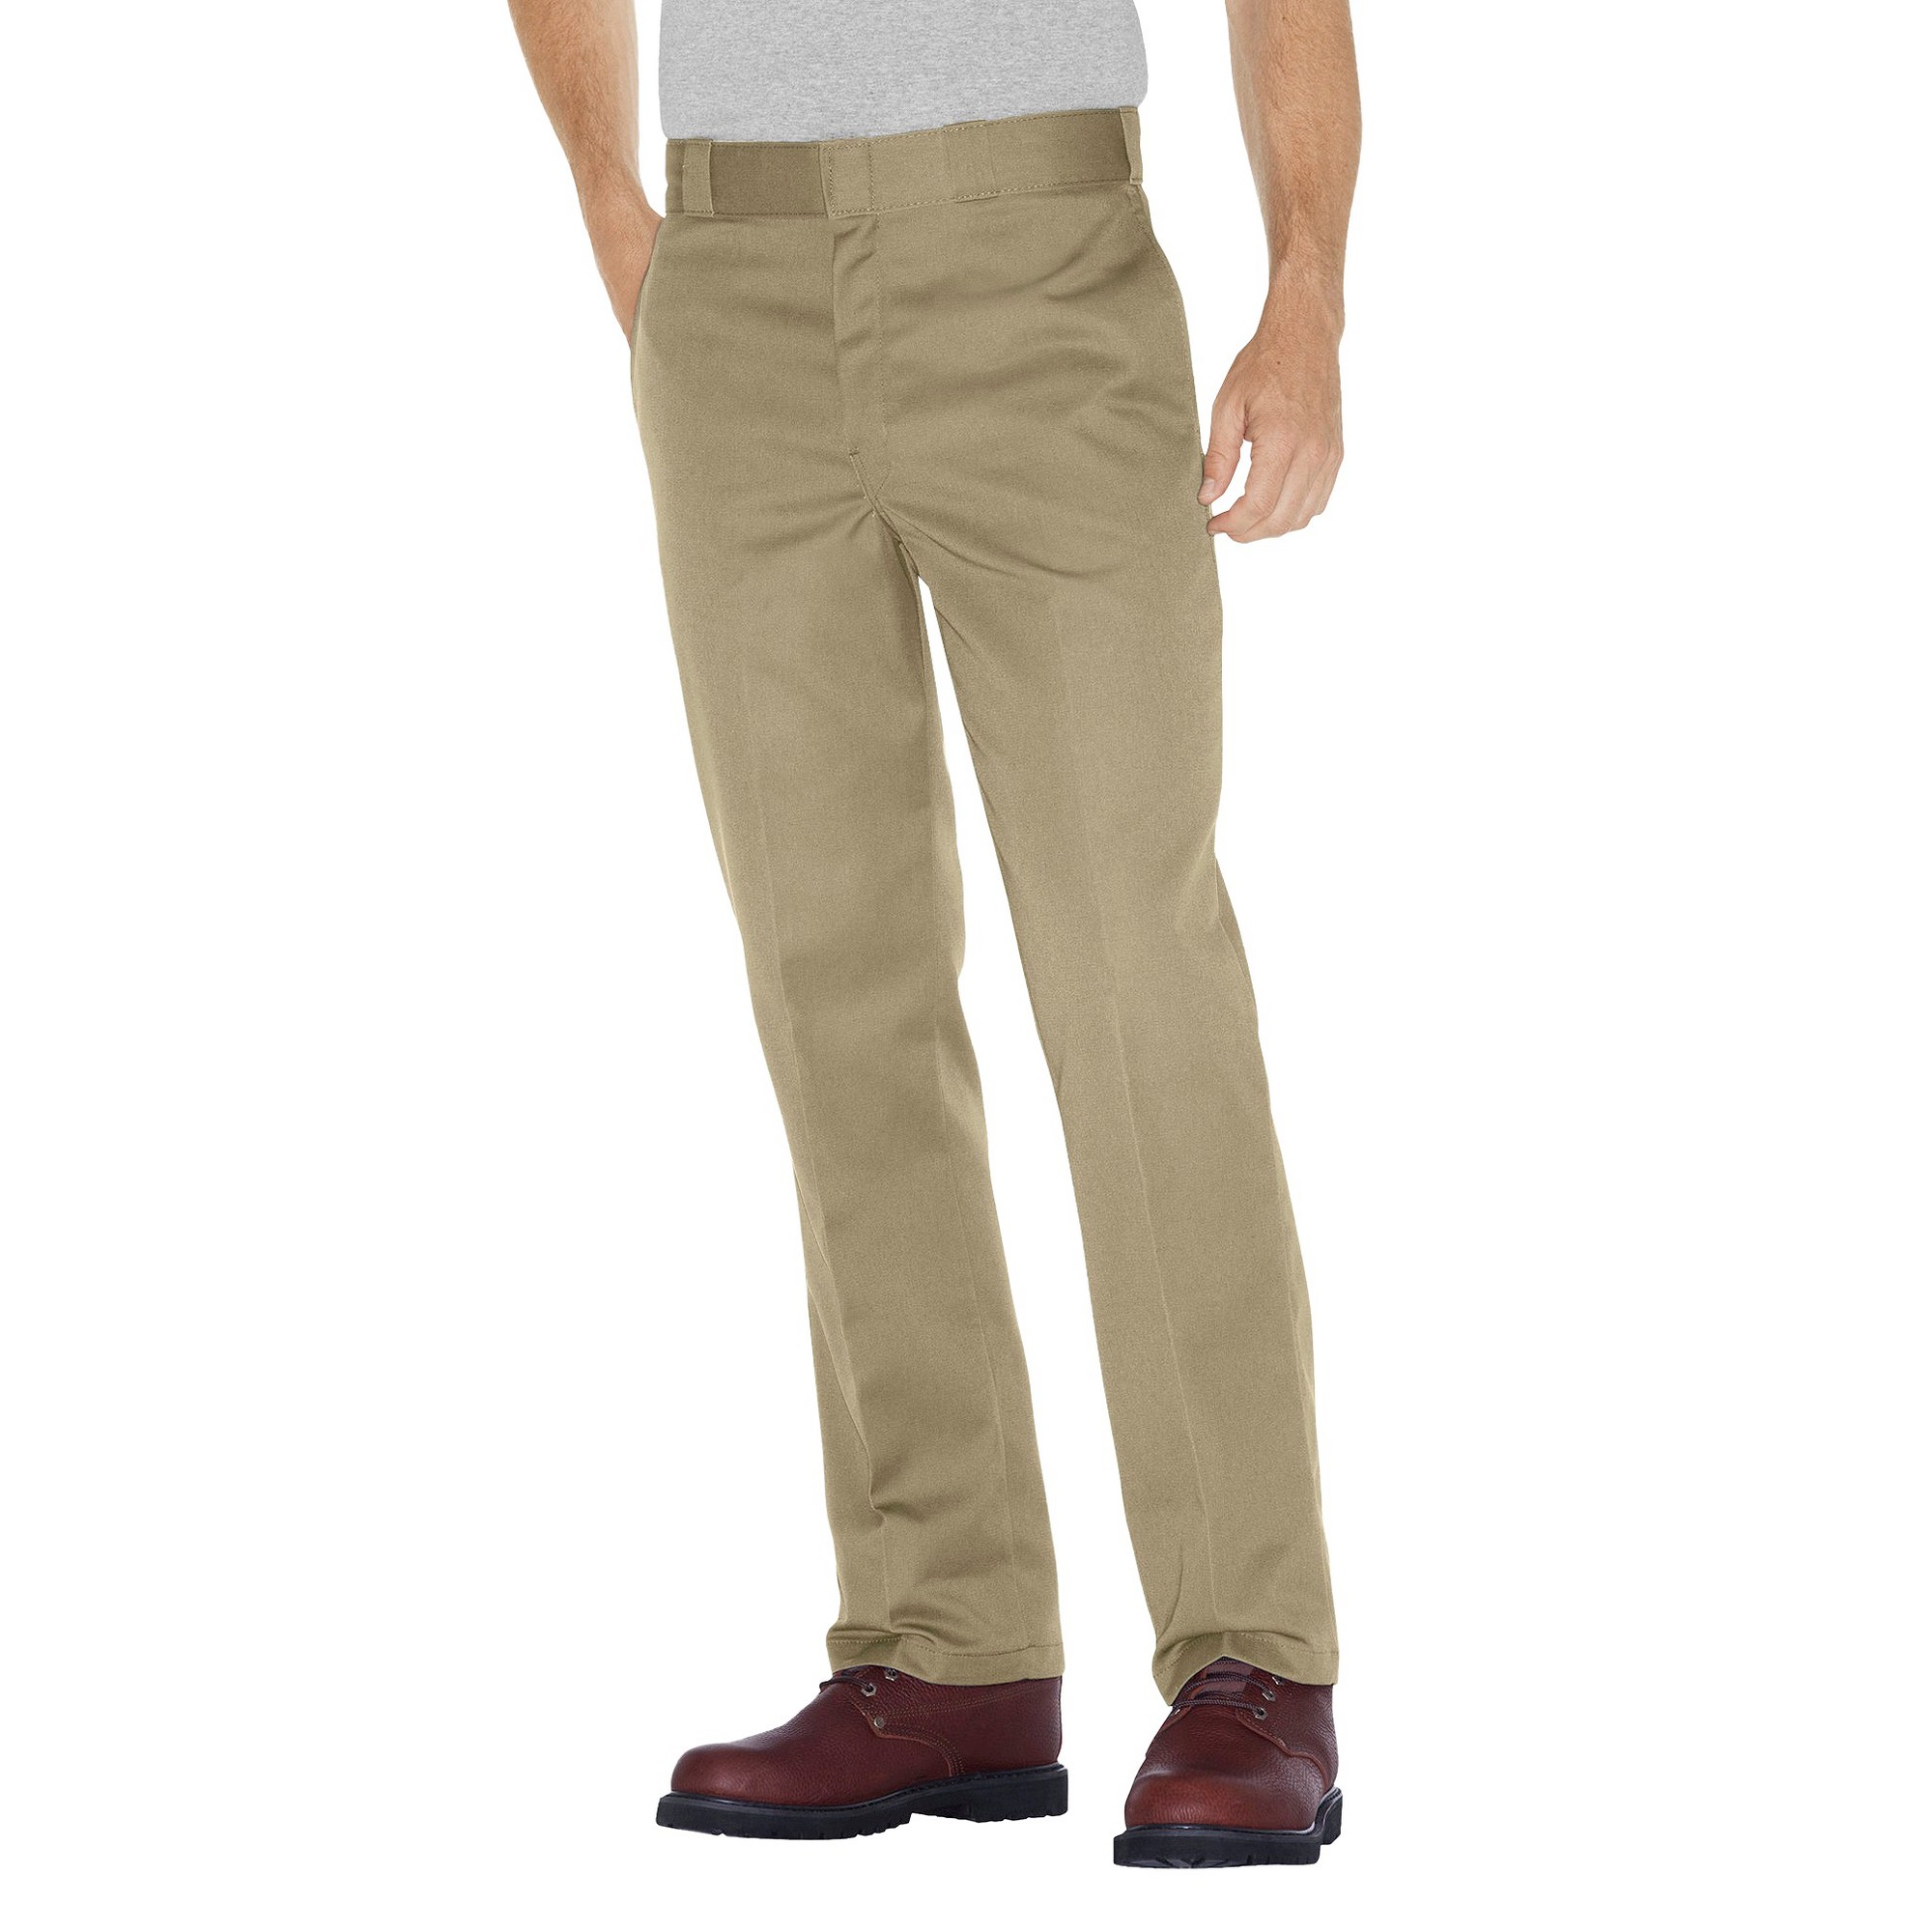 Dickies Men'sTall Original Fit 874 Twill Pants - Khaki 34x36, Men's, Green